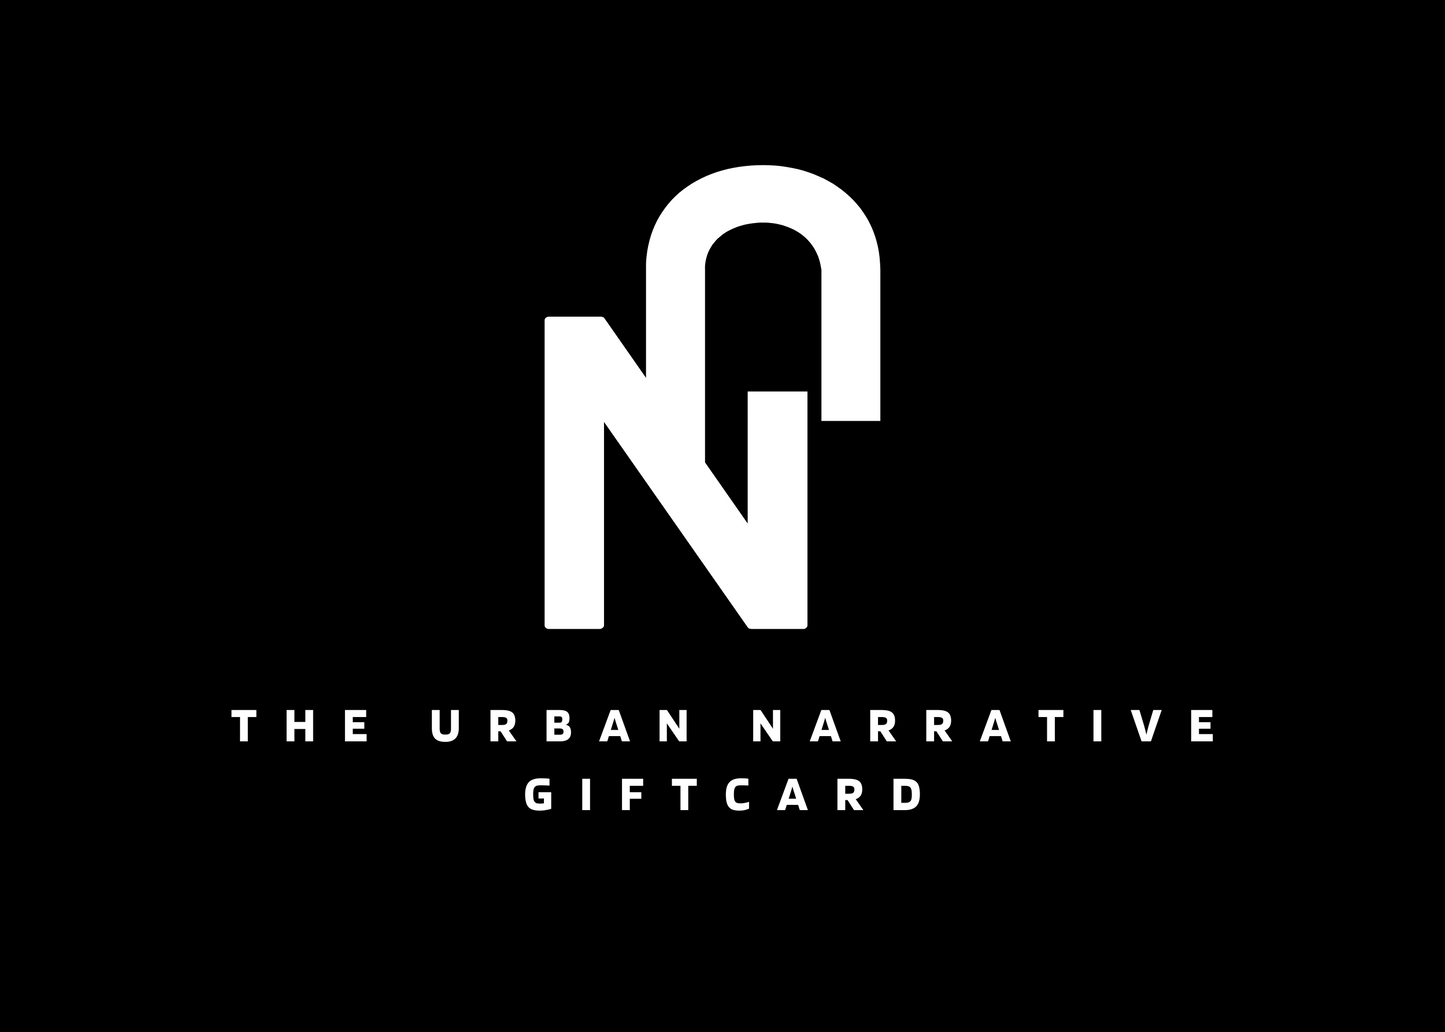 The Urban Narrative gift card